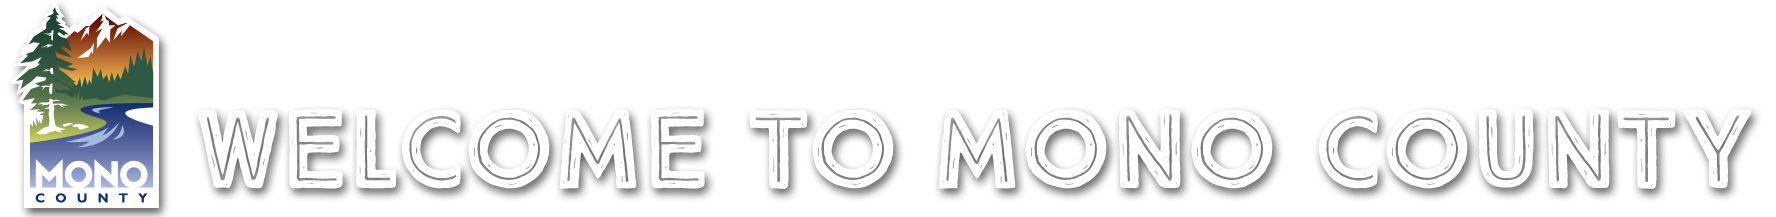 Mono County Tourism and Film Commission Logo